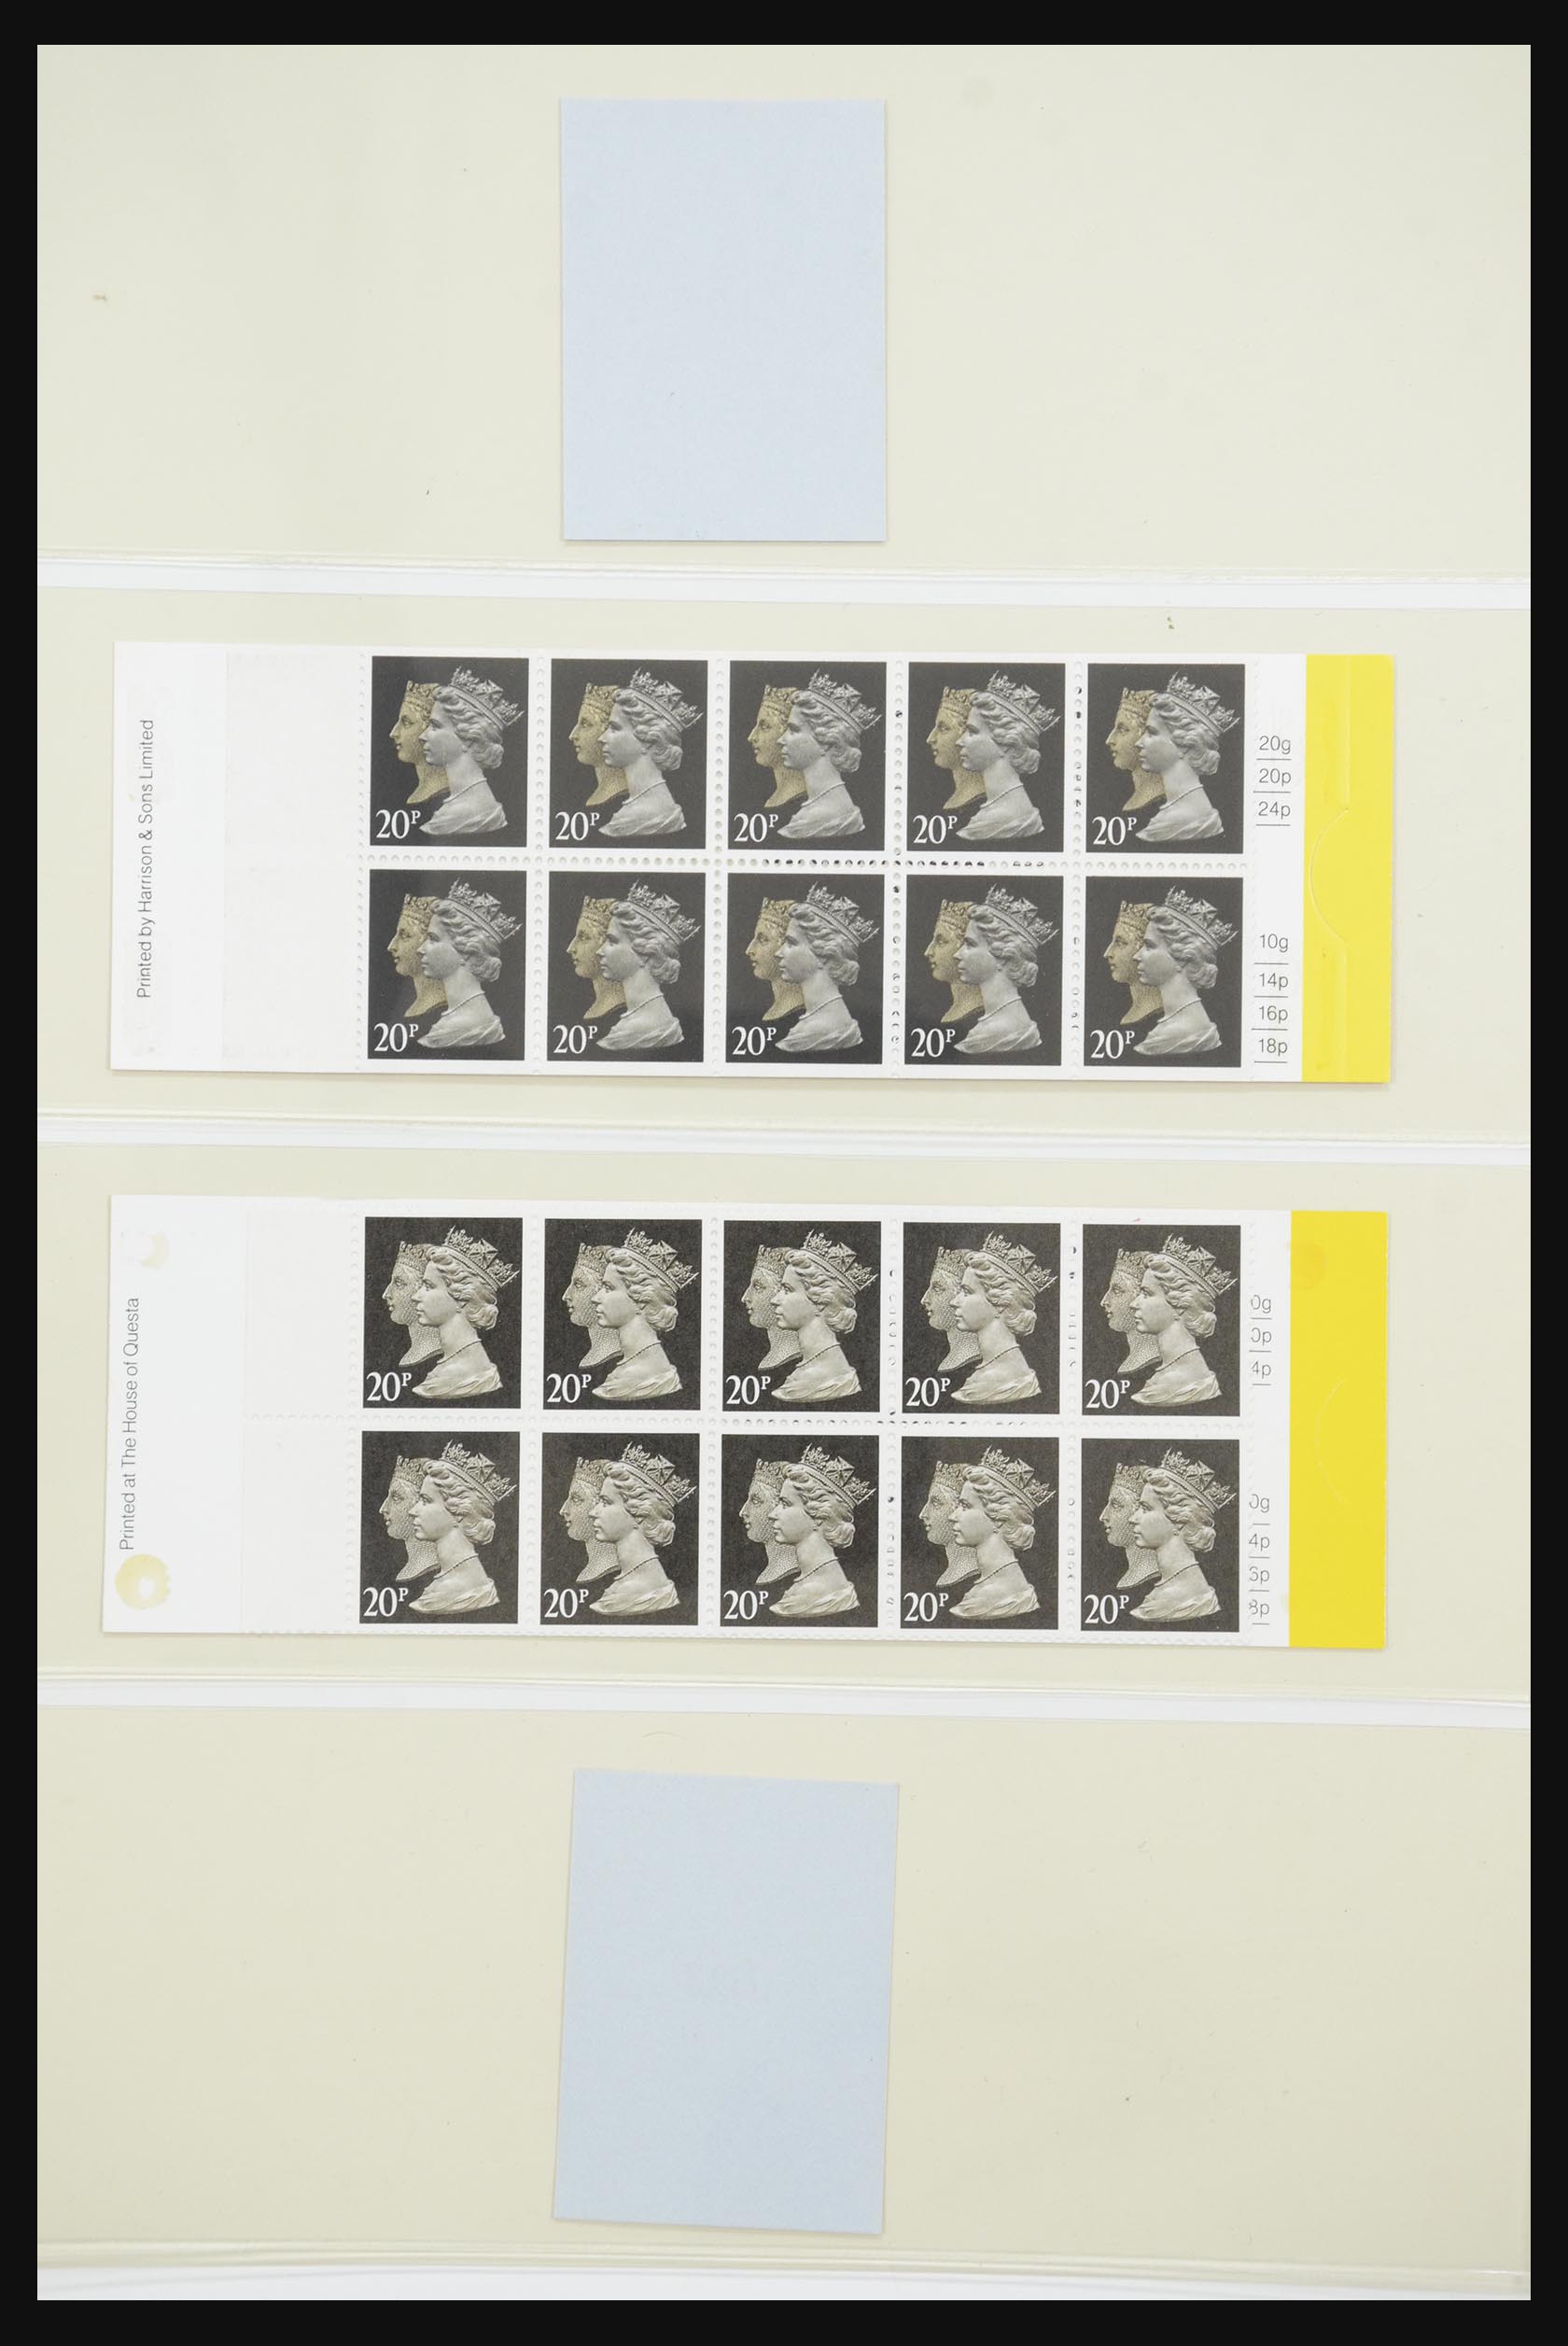 31960 188 - 31960 Great Britain stampbooklets 1989-2000.